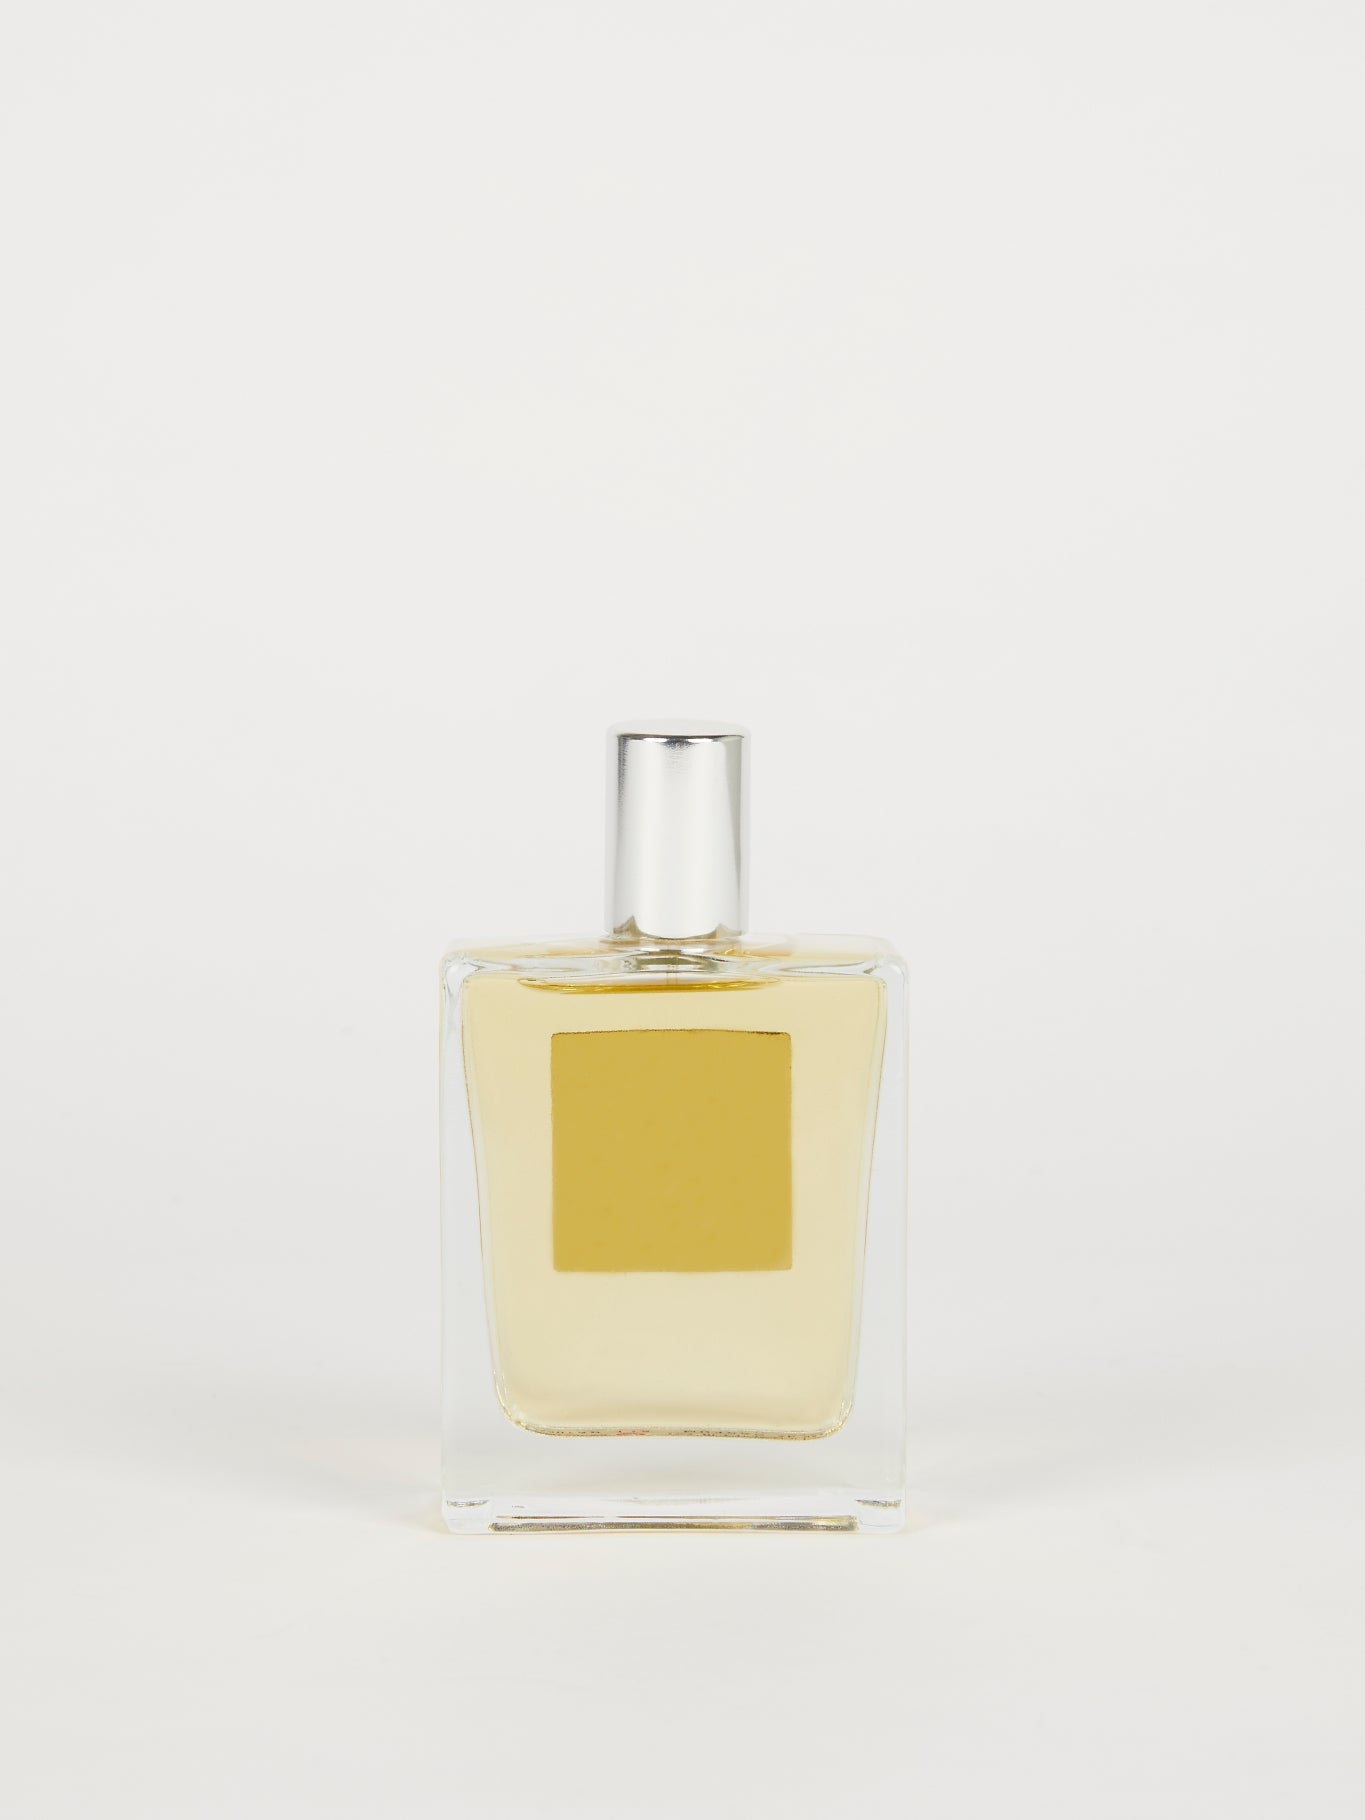 Schnarwiler Eau de Parfum "O", 50ml